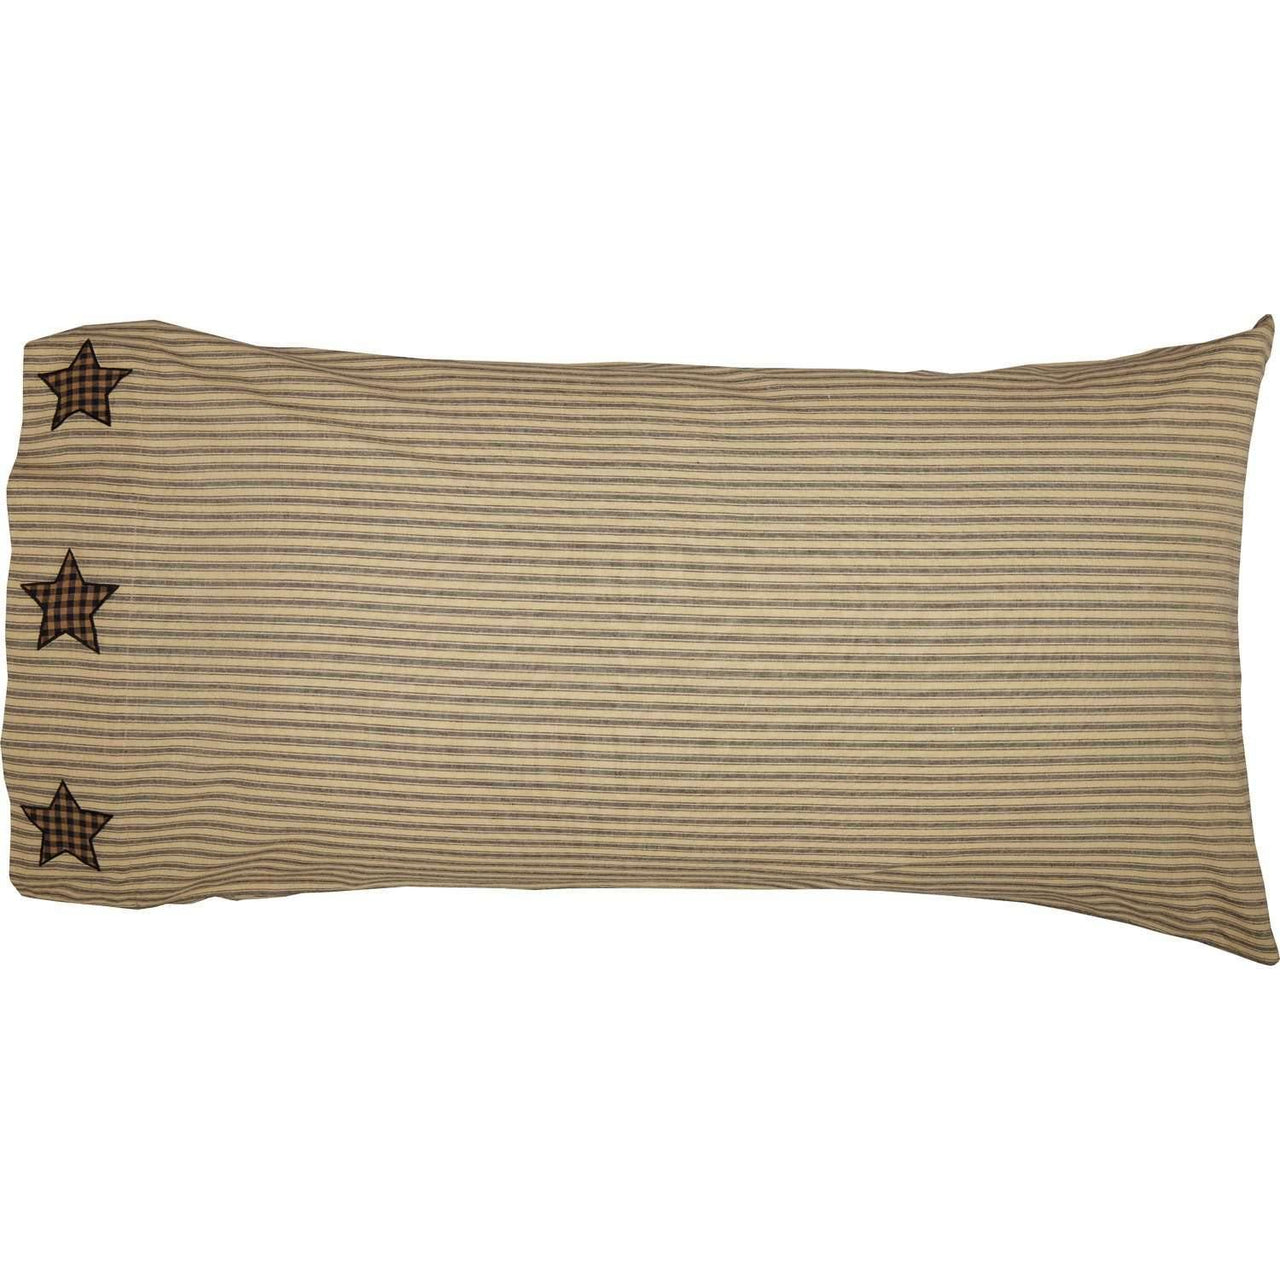 Farmhouse Star King Pillow Case w/Applique Star Set of 2 21x40 VHC Brands - The Fox Decor